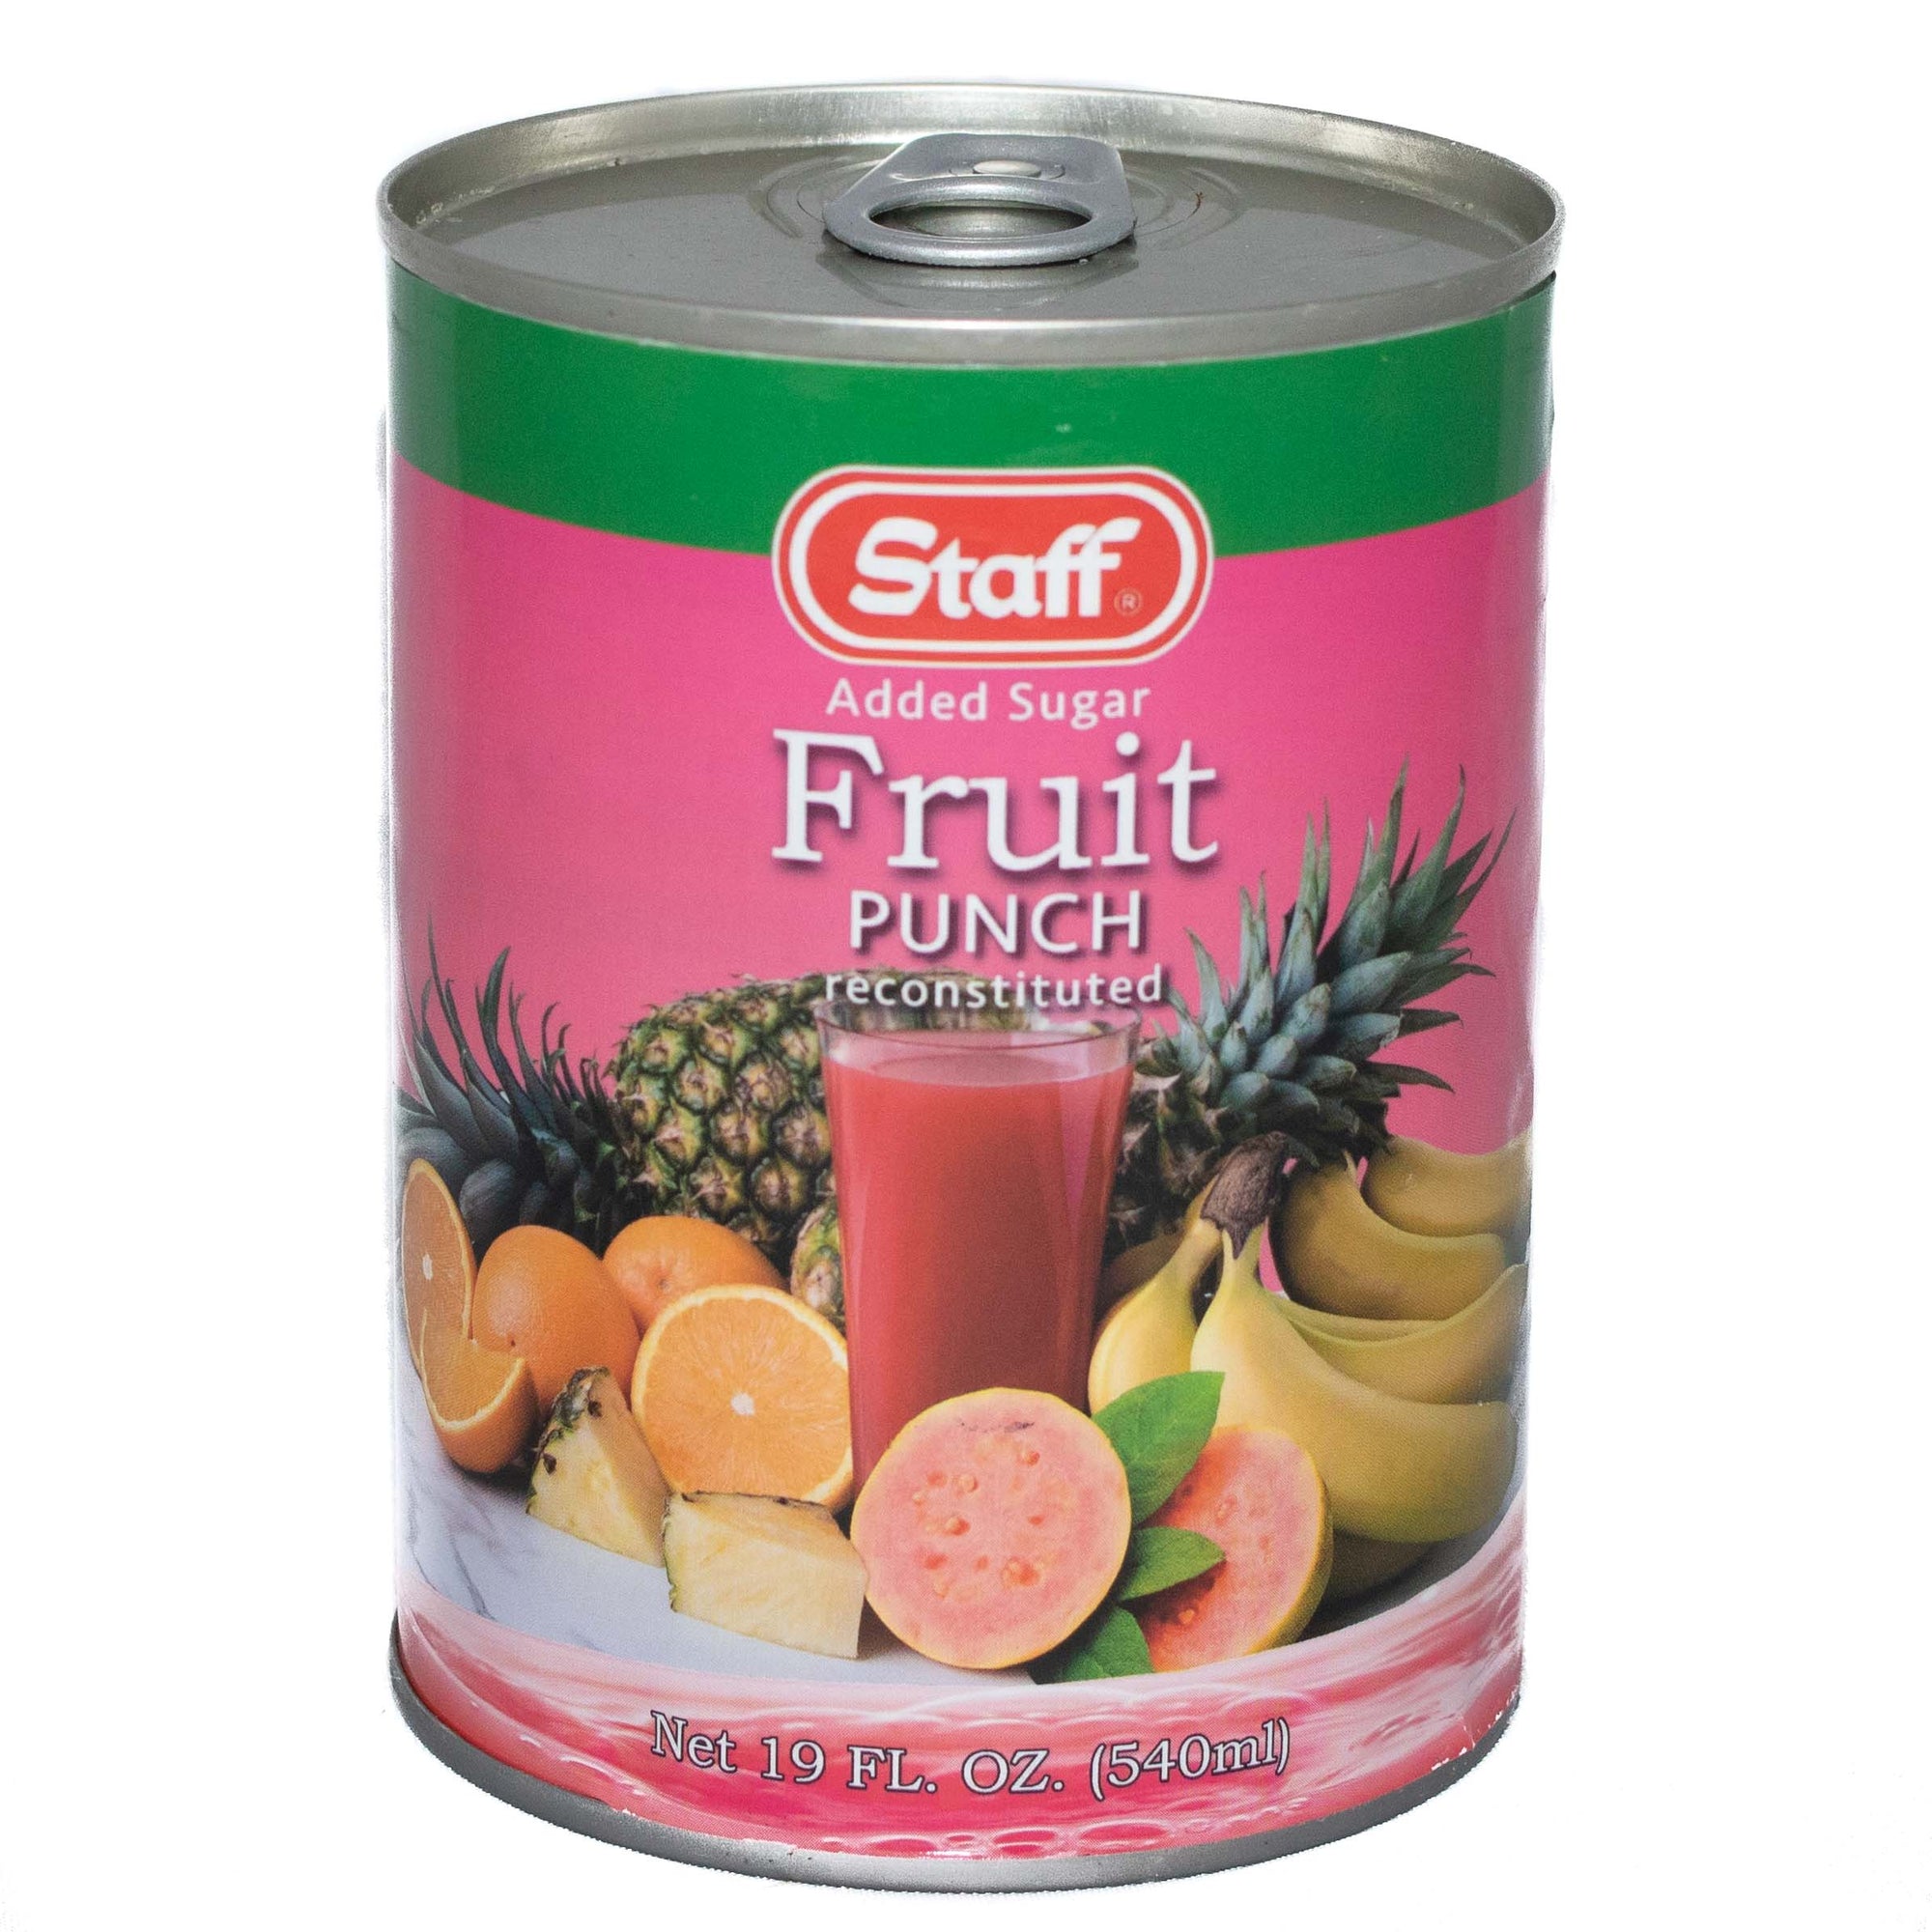 STAFF Fruit Punch Juice 19 oz